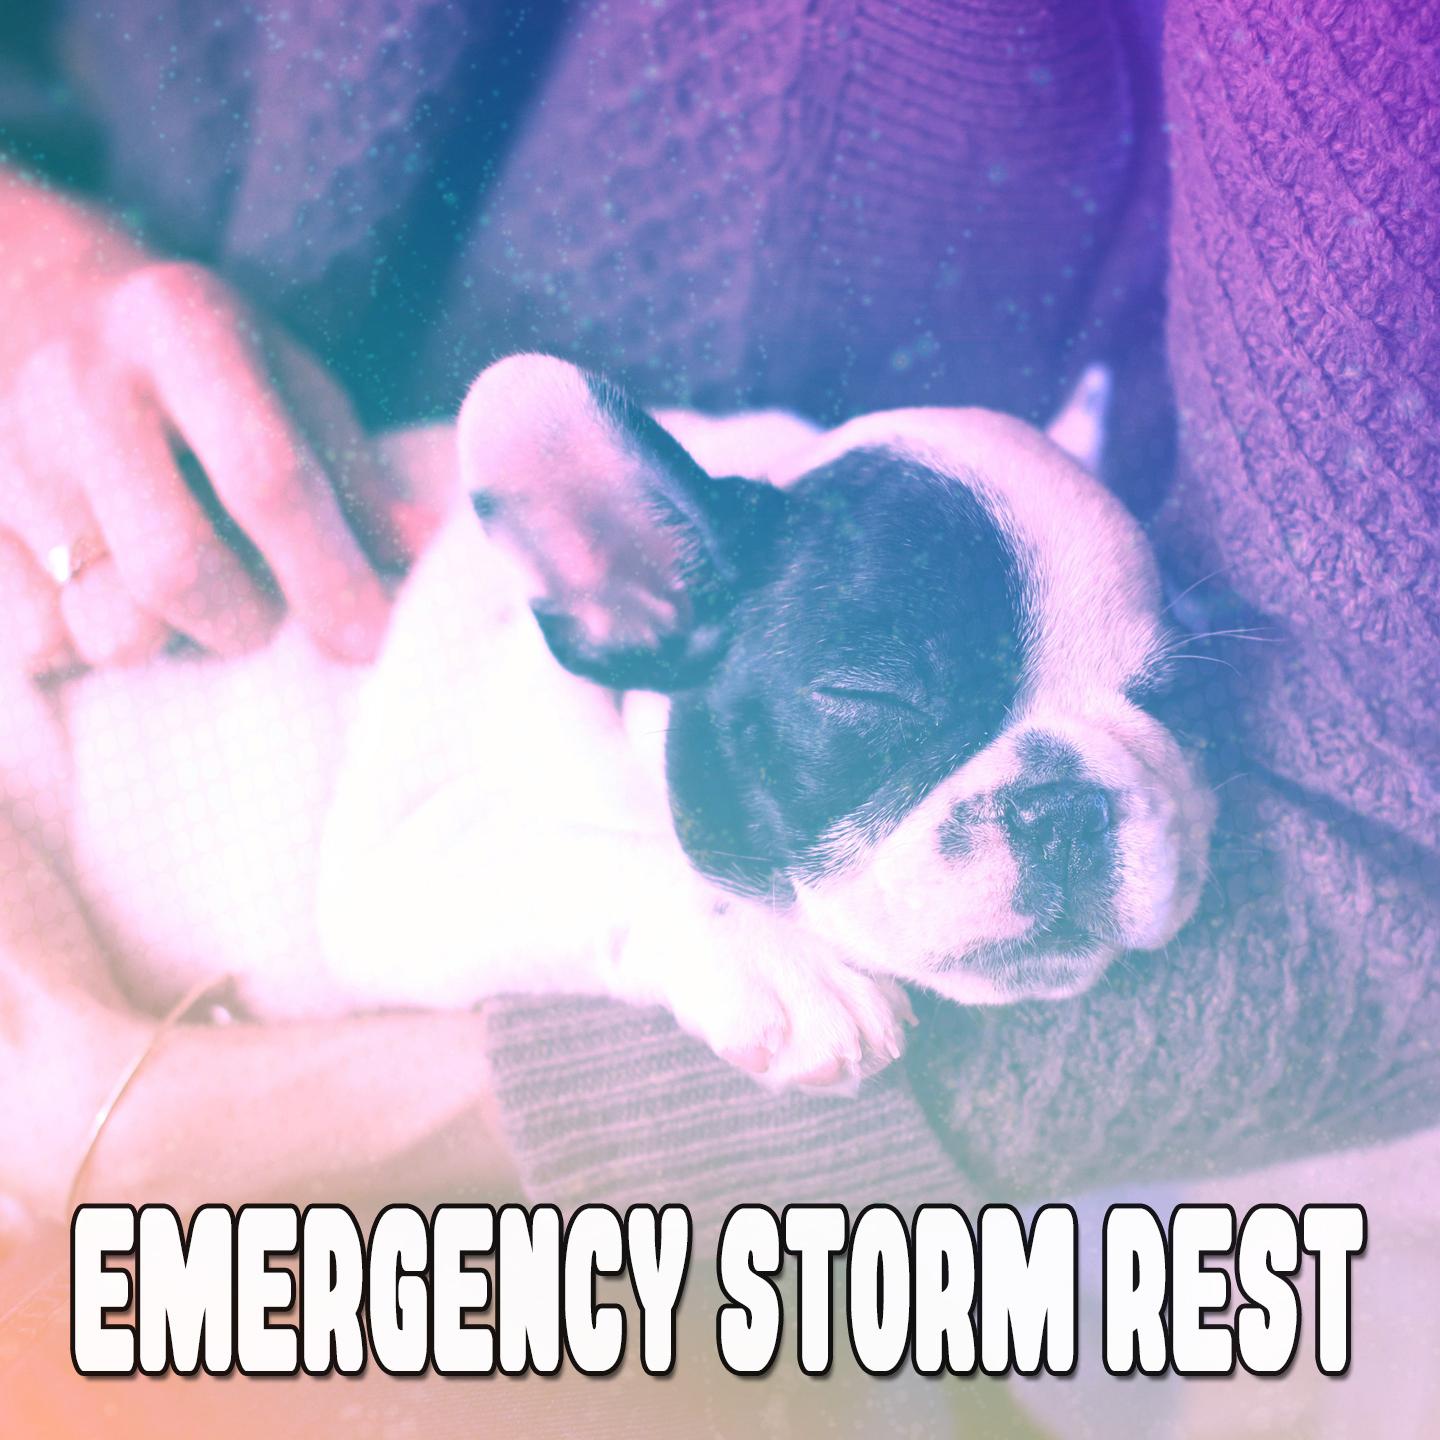 Emergency Storm Rest